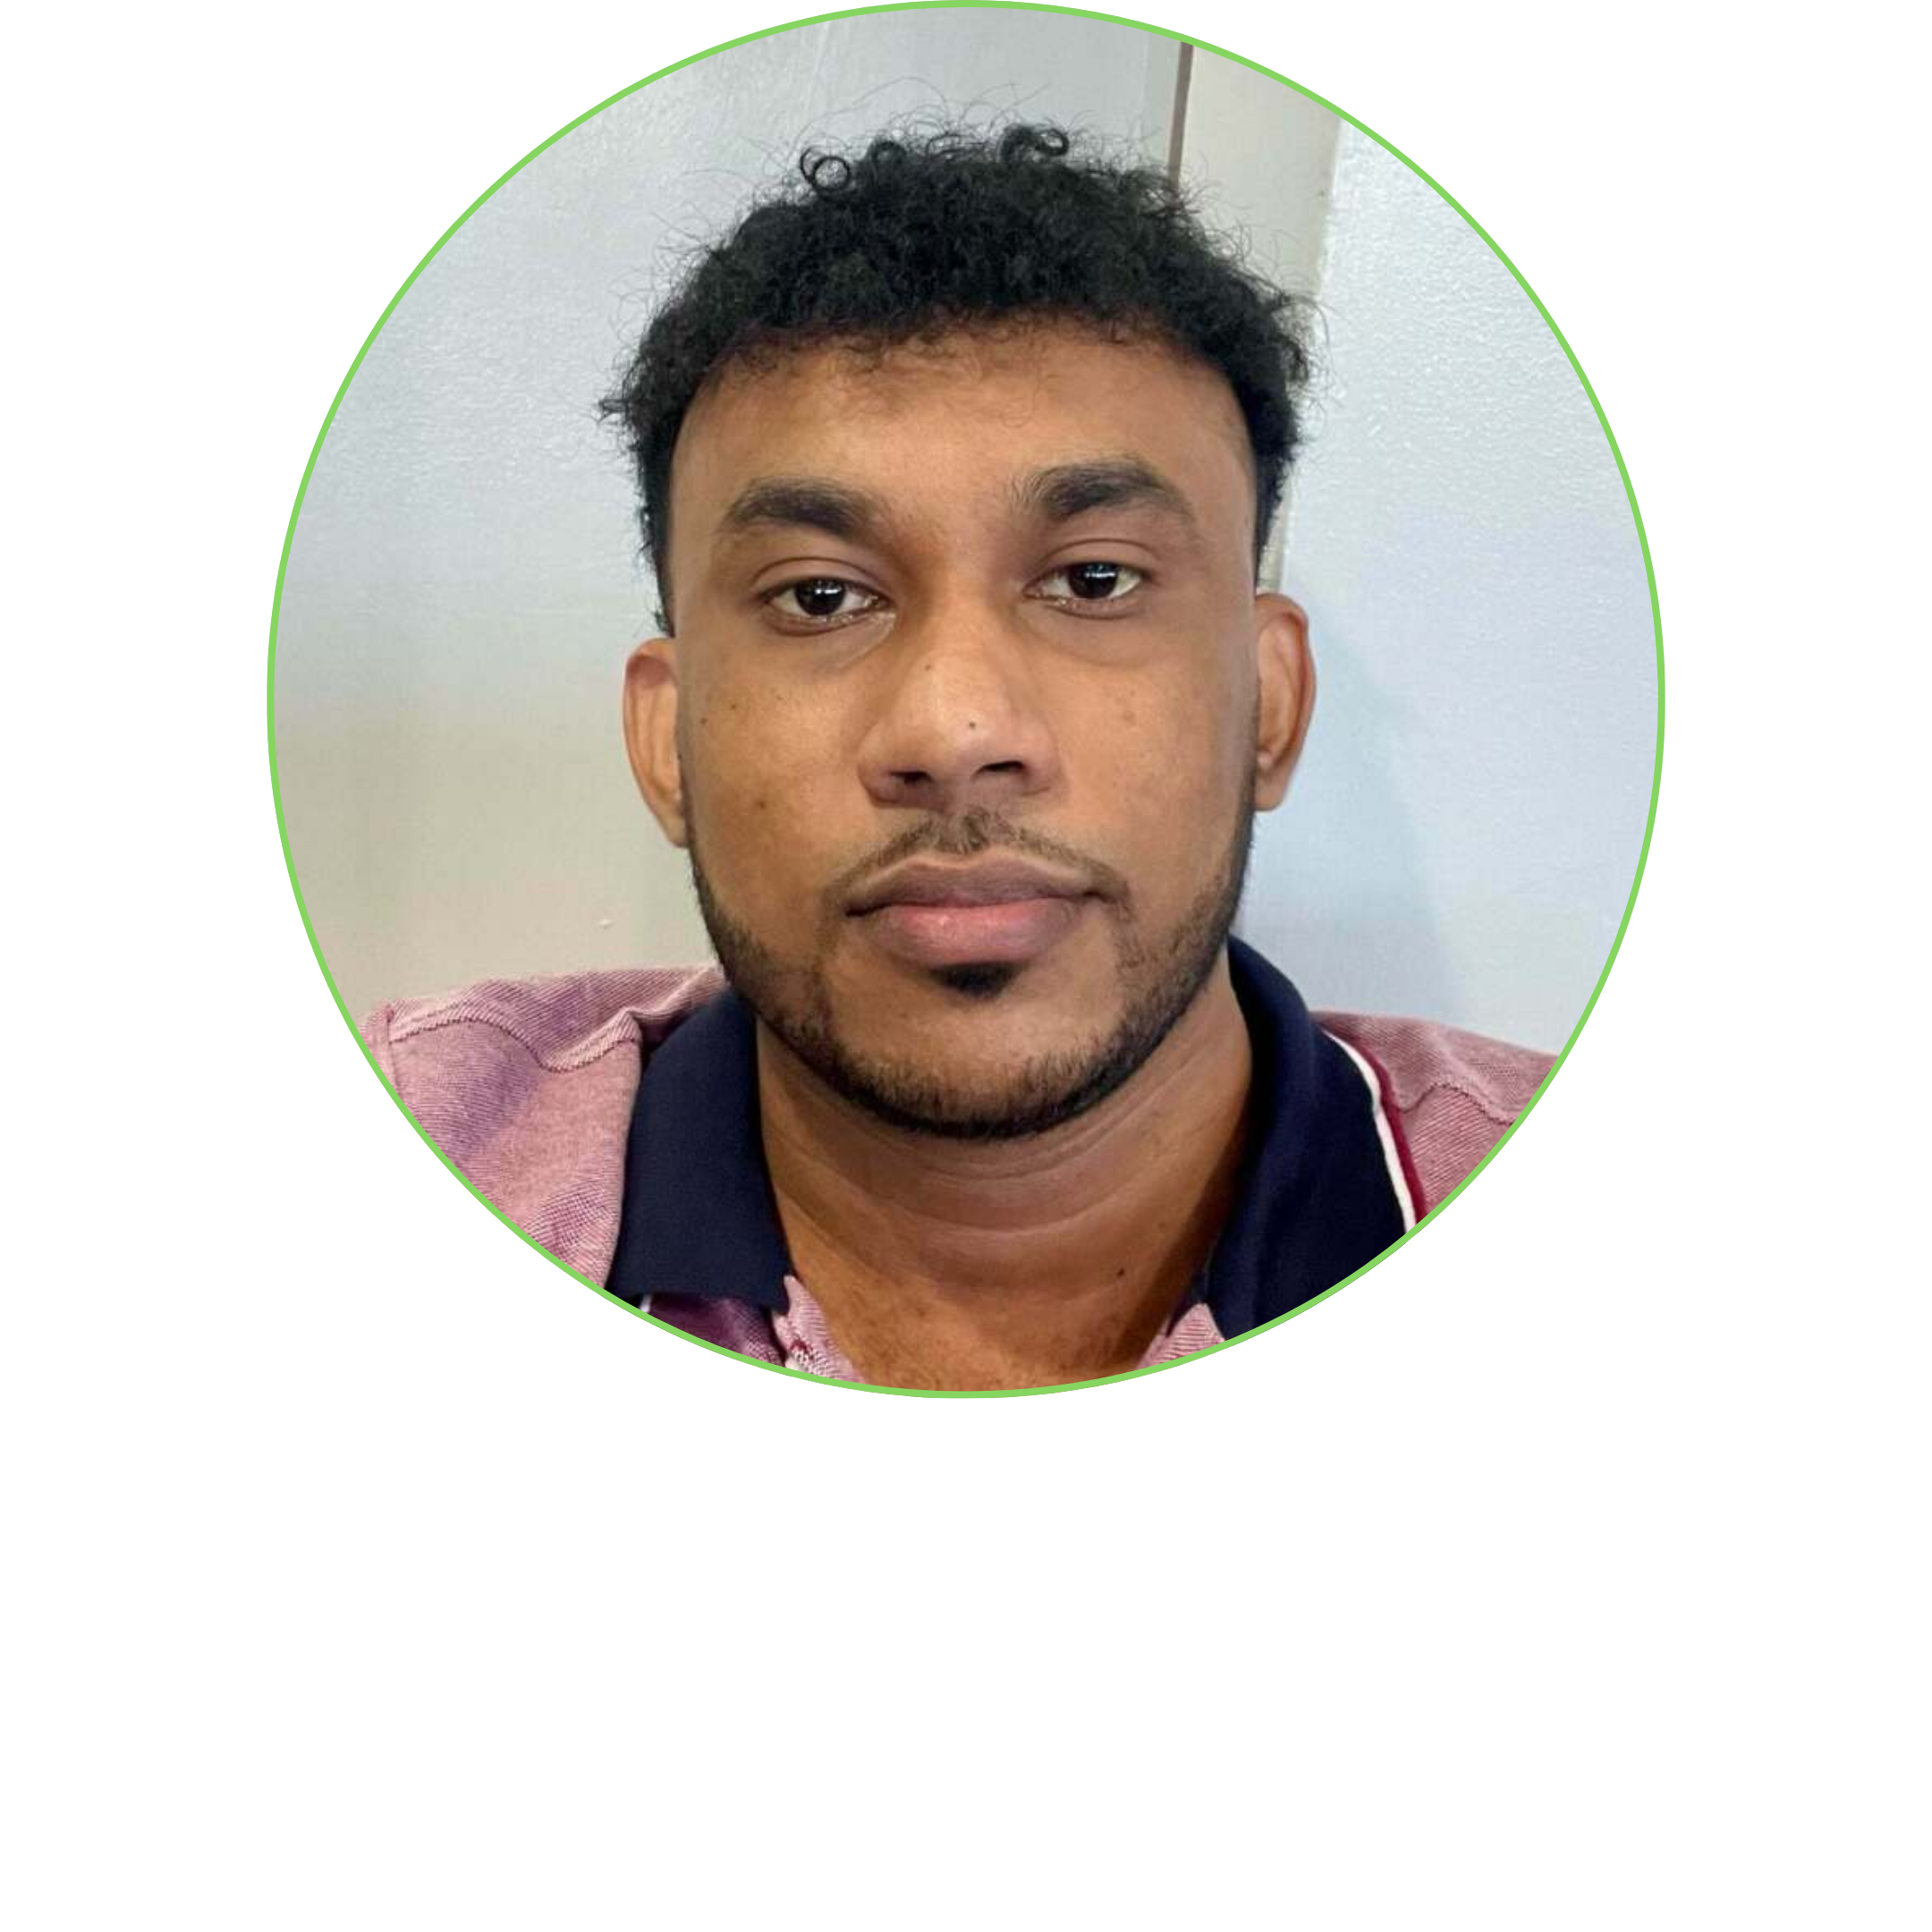 Sbm Offshore Deenanauth Christmah 2 logo